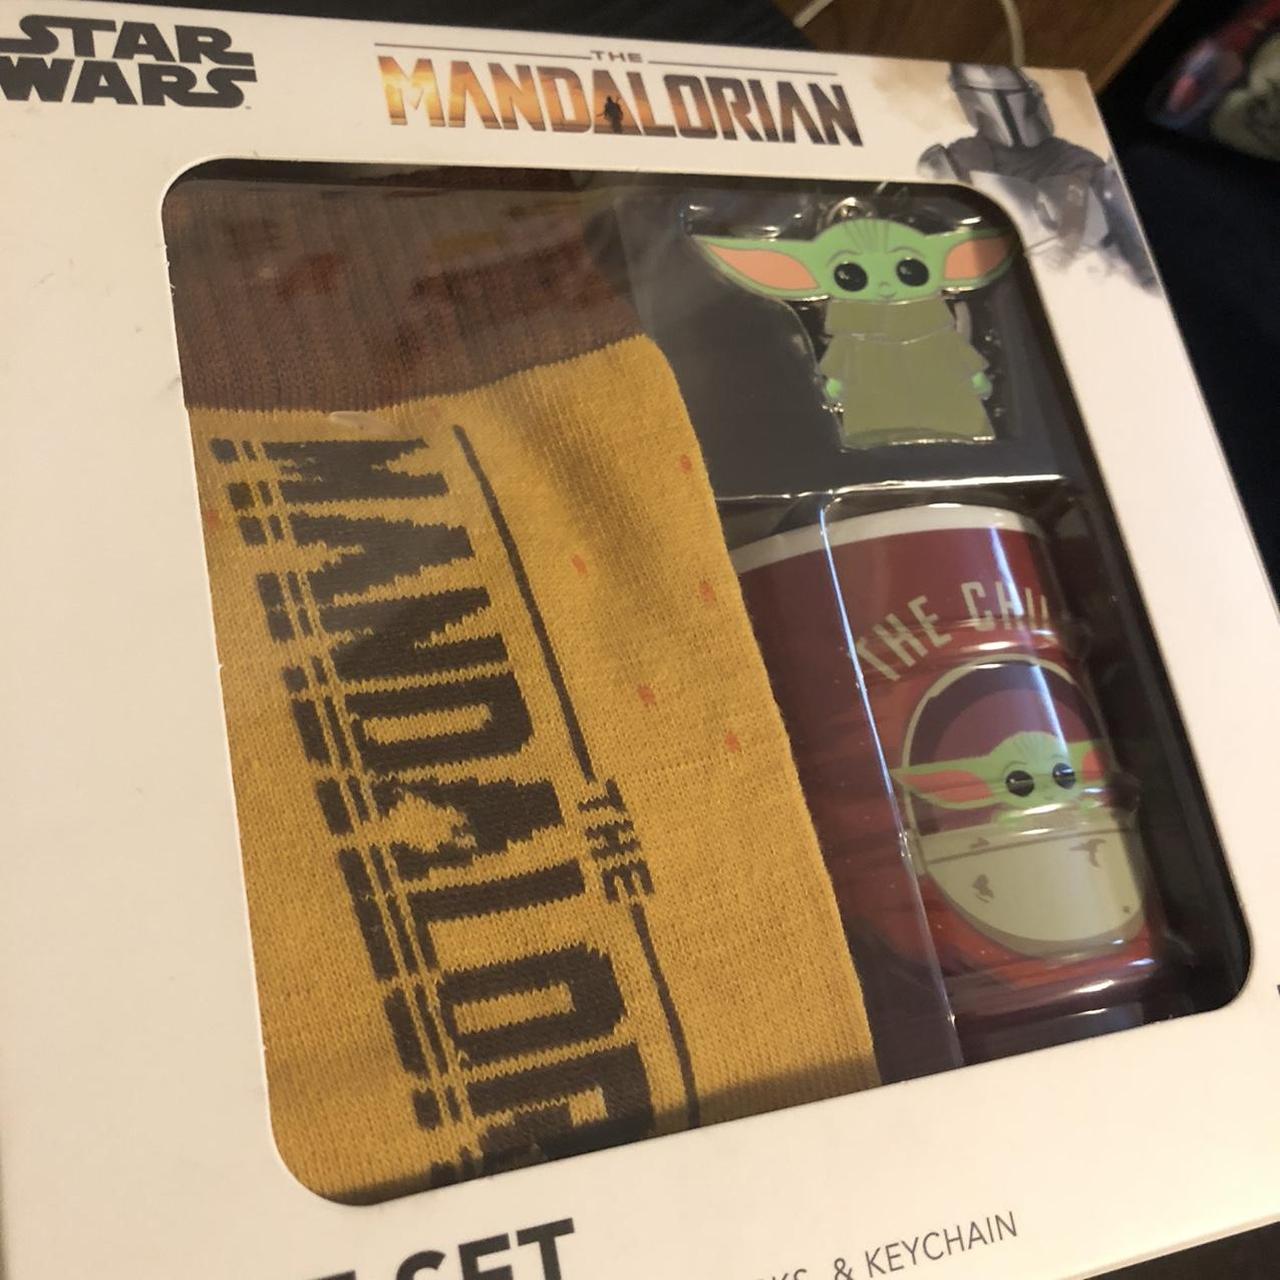 Brand new, Star Wars Baby Yoda Trick or Treat - Depop